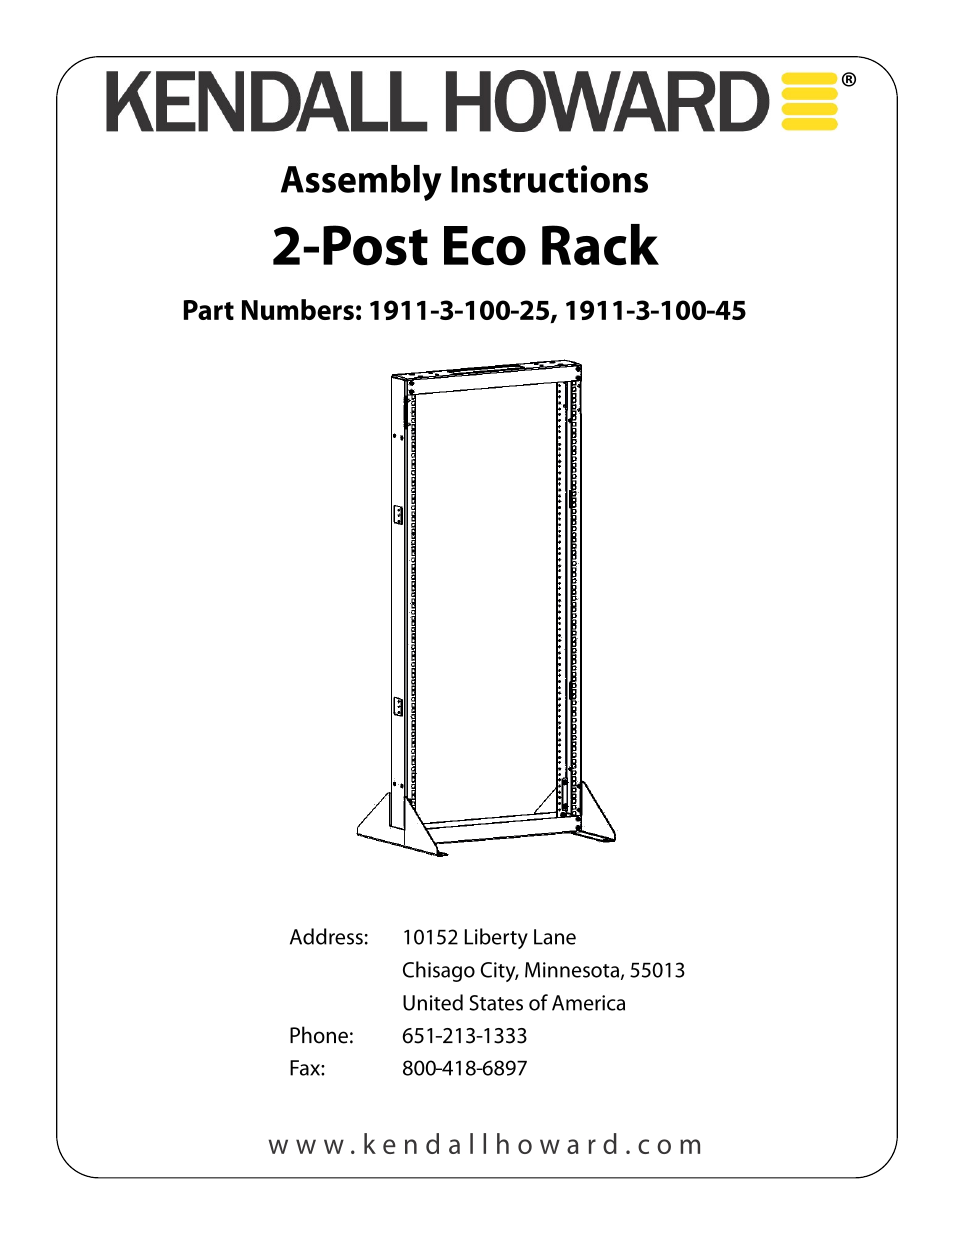 1911-3-100-45 45U 2-Post ECO Rack